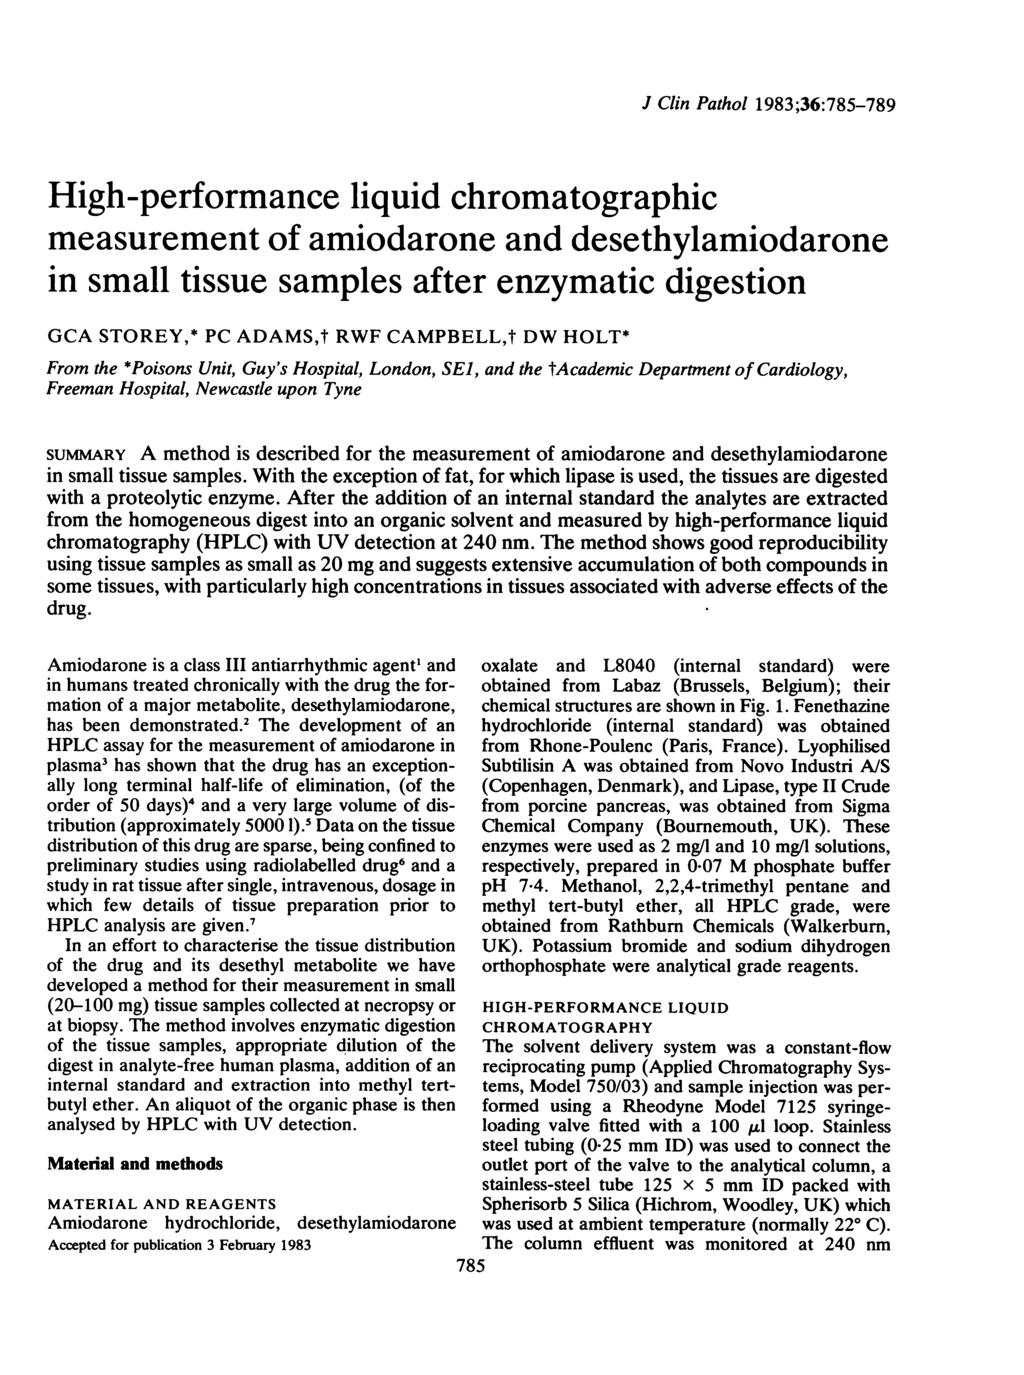 J Clin Pathol 1983;36:785-789 High-performance liquid chromatographic measurement of amiodarone and desethylamiodarone in small tissue samples after enzymatic digestion GCA STOREY,* PC ADAMS,t RWF